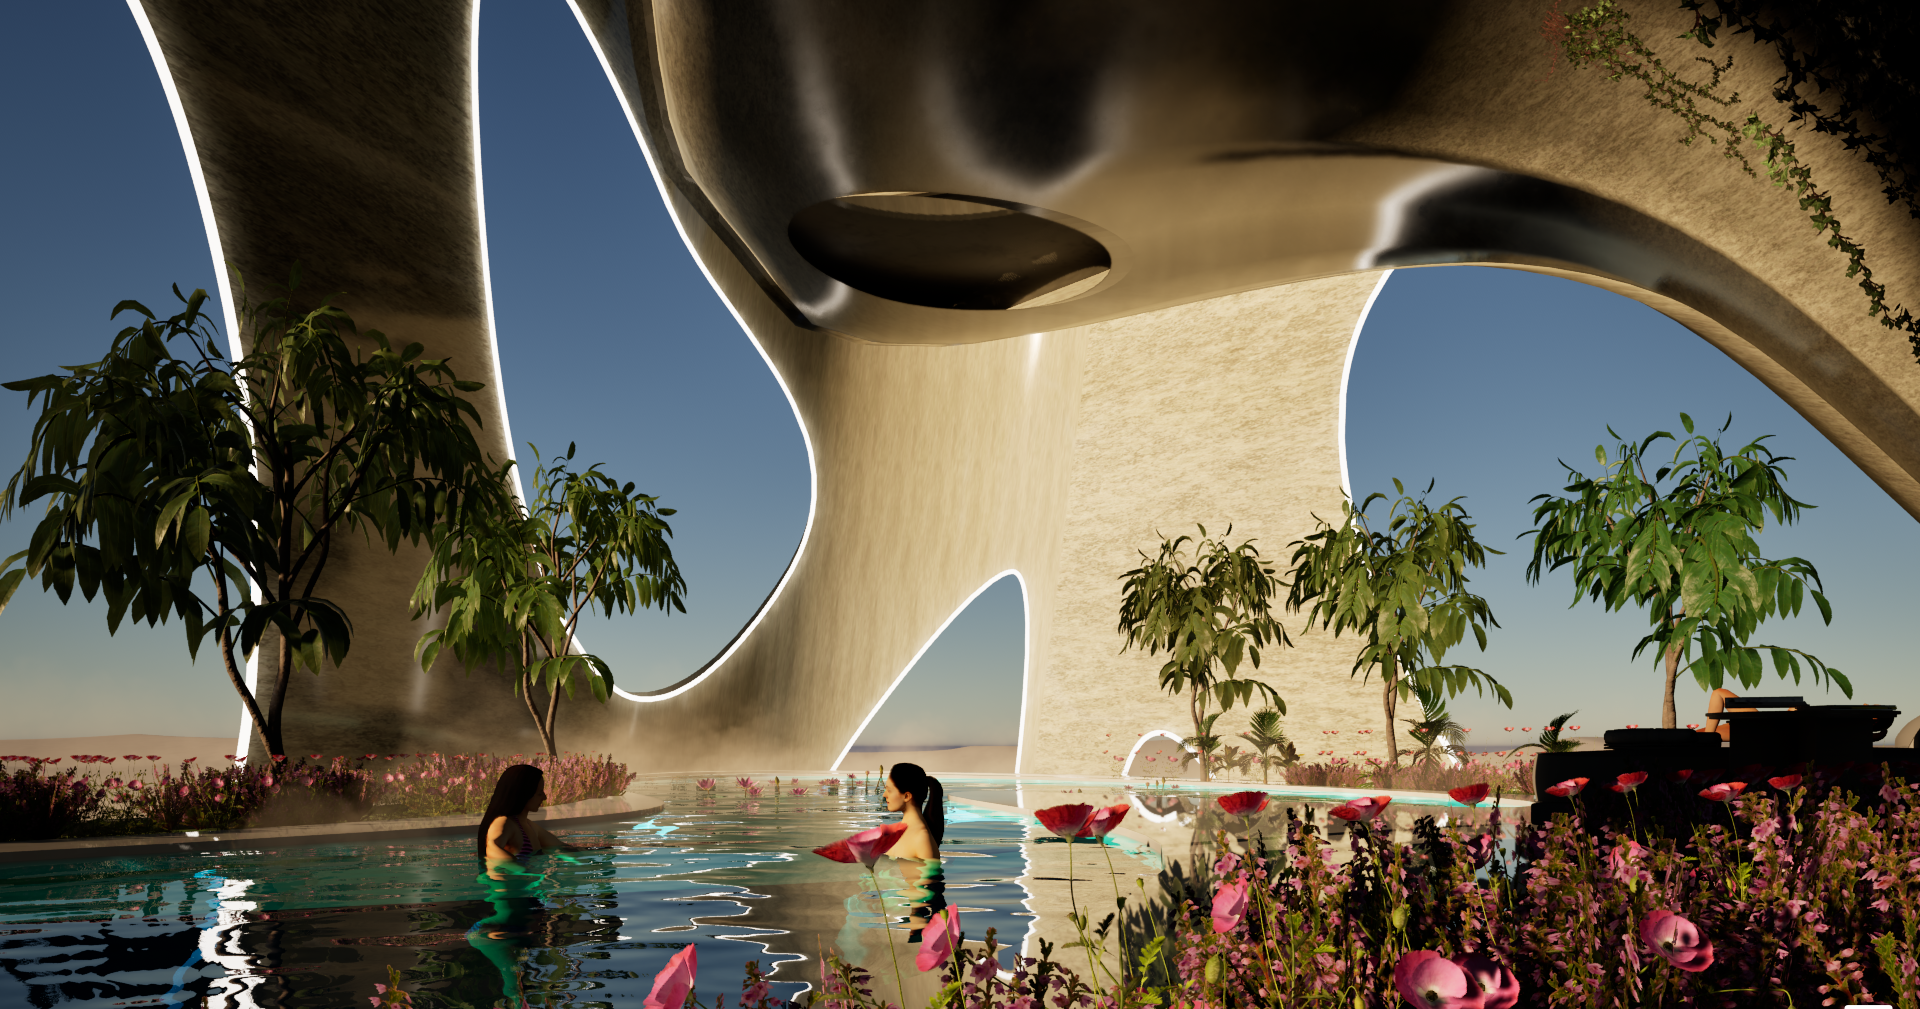 Debbie-Flevotomou-Architects--Interior-Octopus-Tower-Inside-9.png